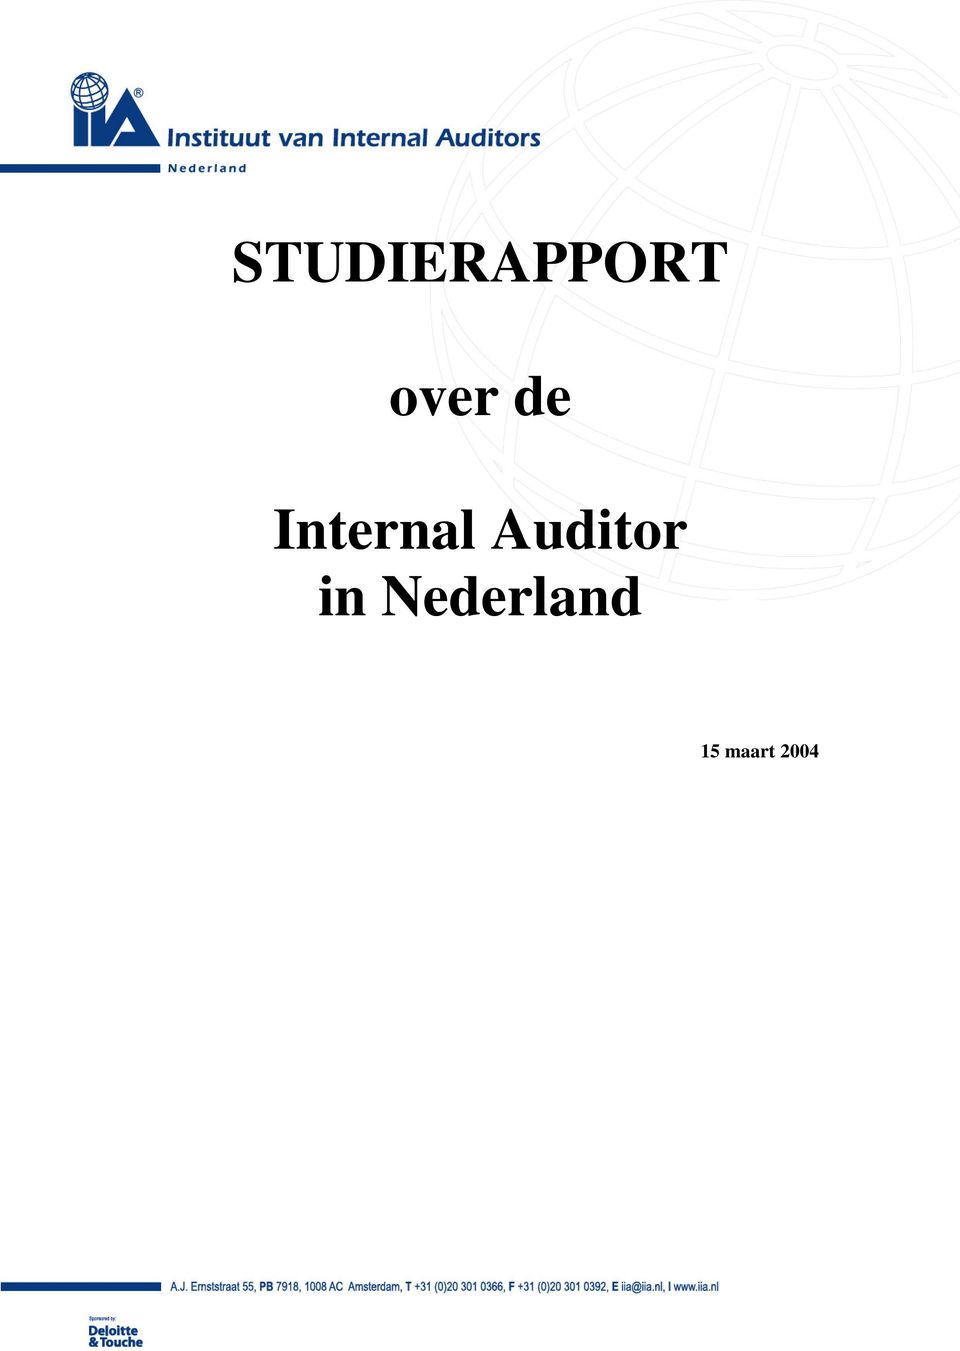 2004 Studierapport De Internal